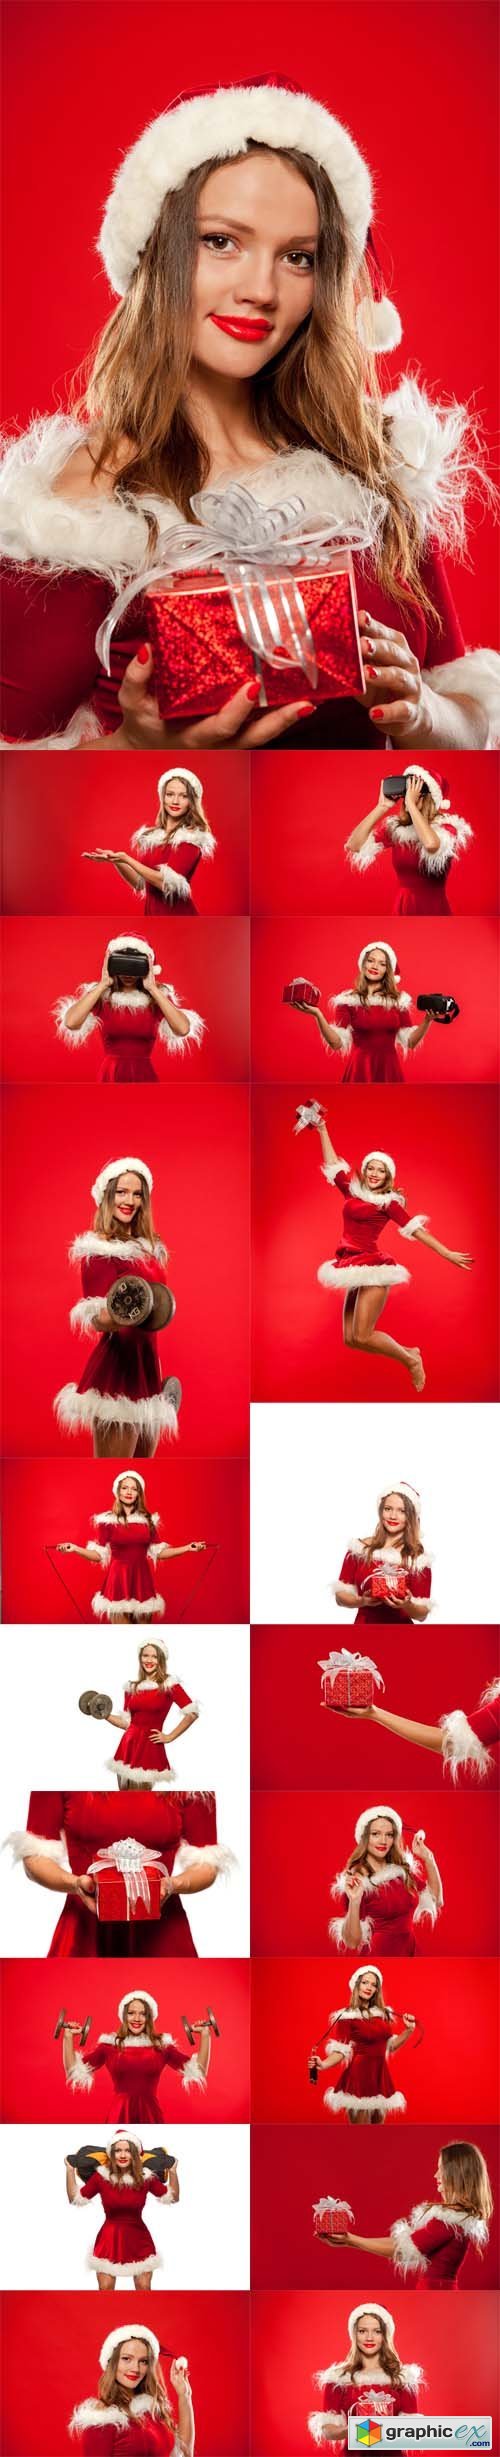 Christmas, x-mas, winter, happiness concept woman in santa helper